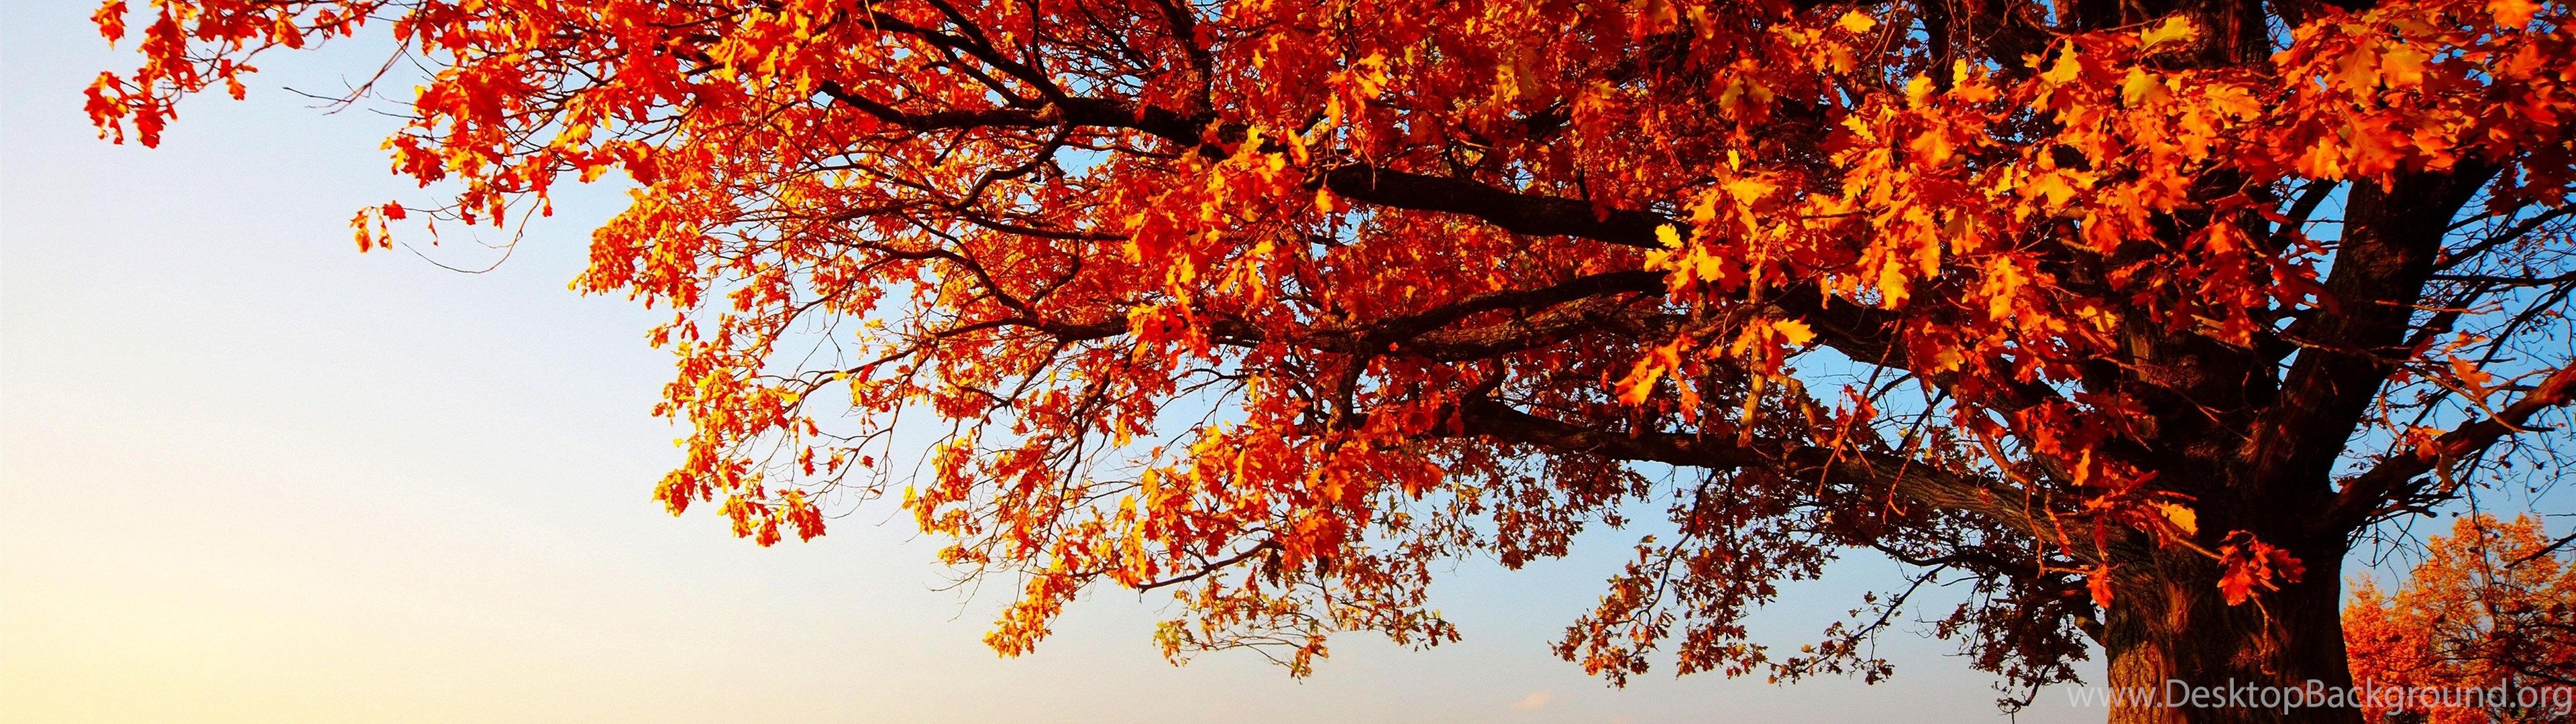 Gallery For Autumn Trees Desktop Wallpaper Desktop Background